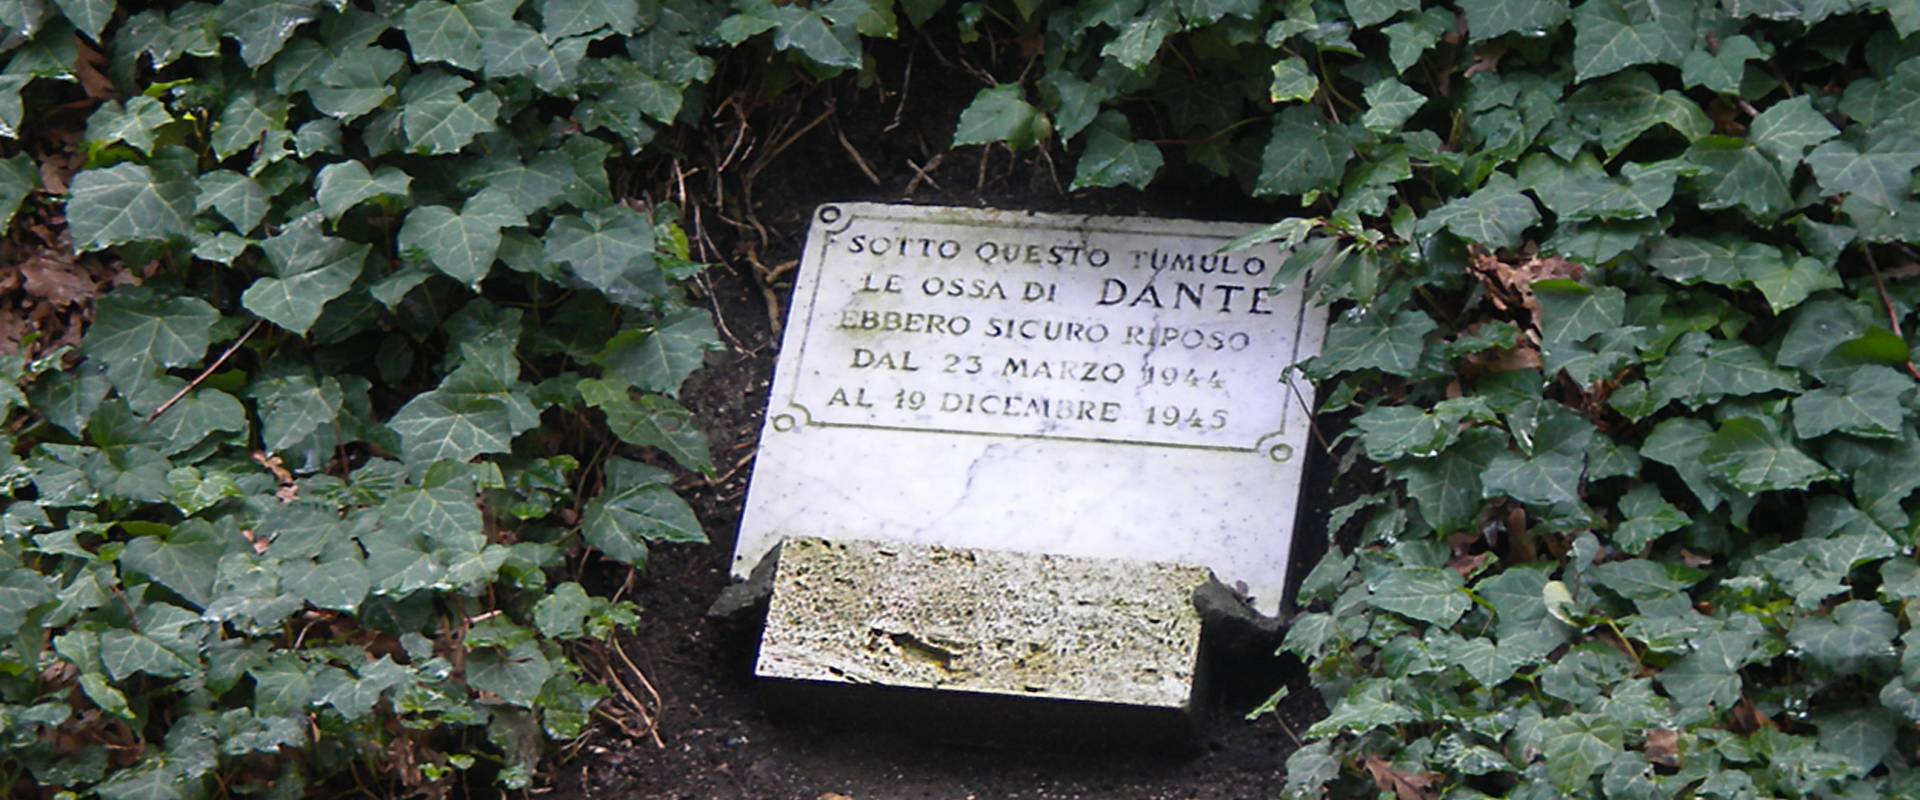 Ravenna Dante foto di Currao